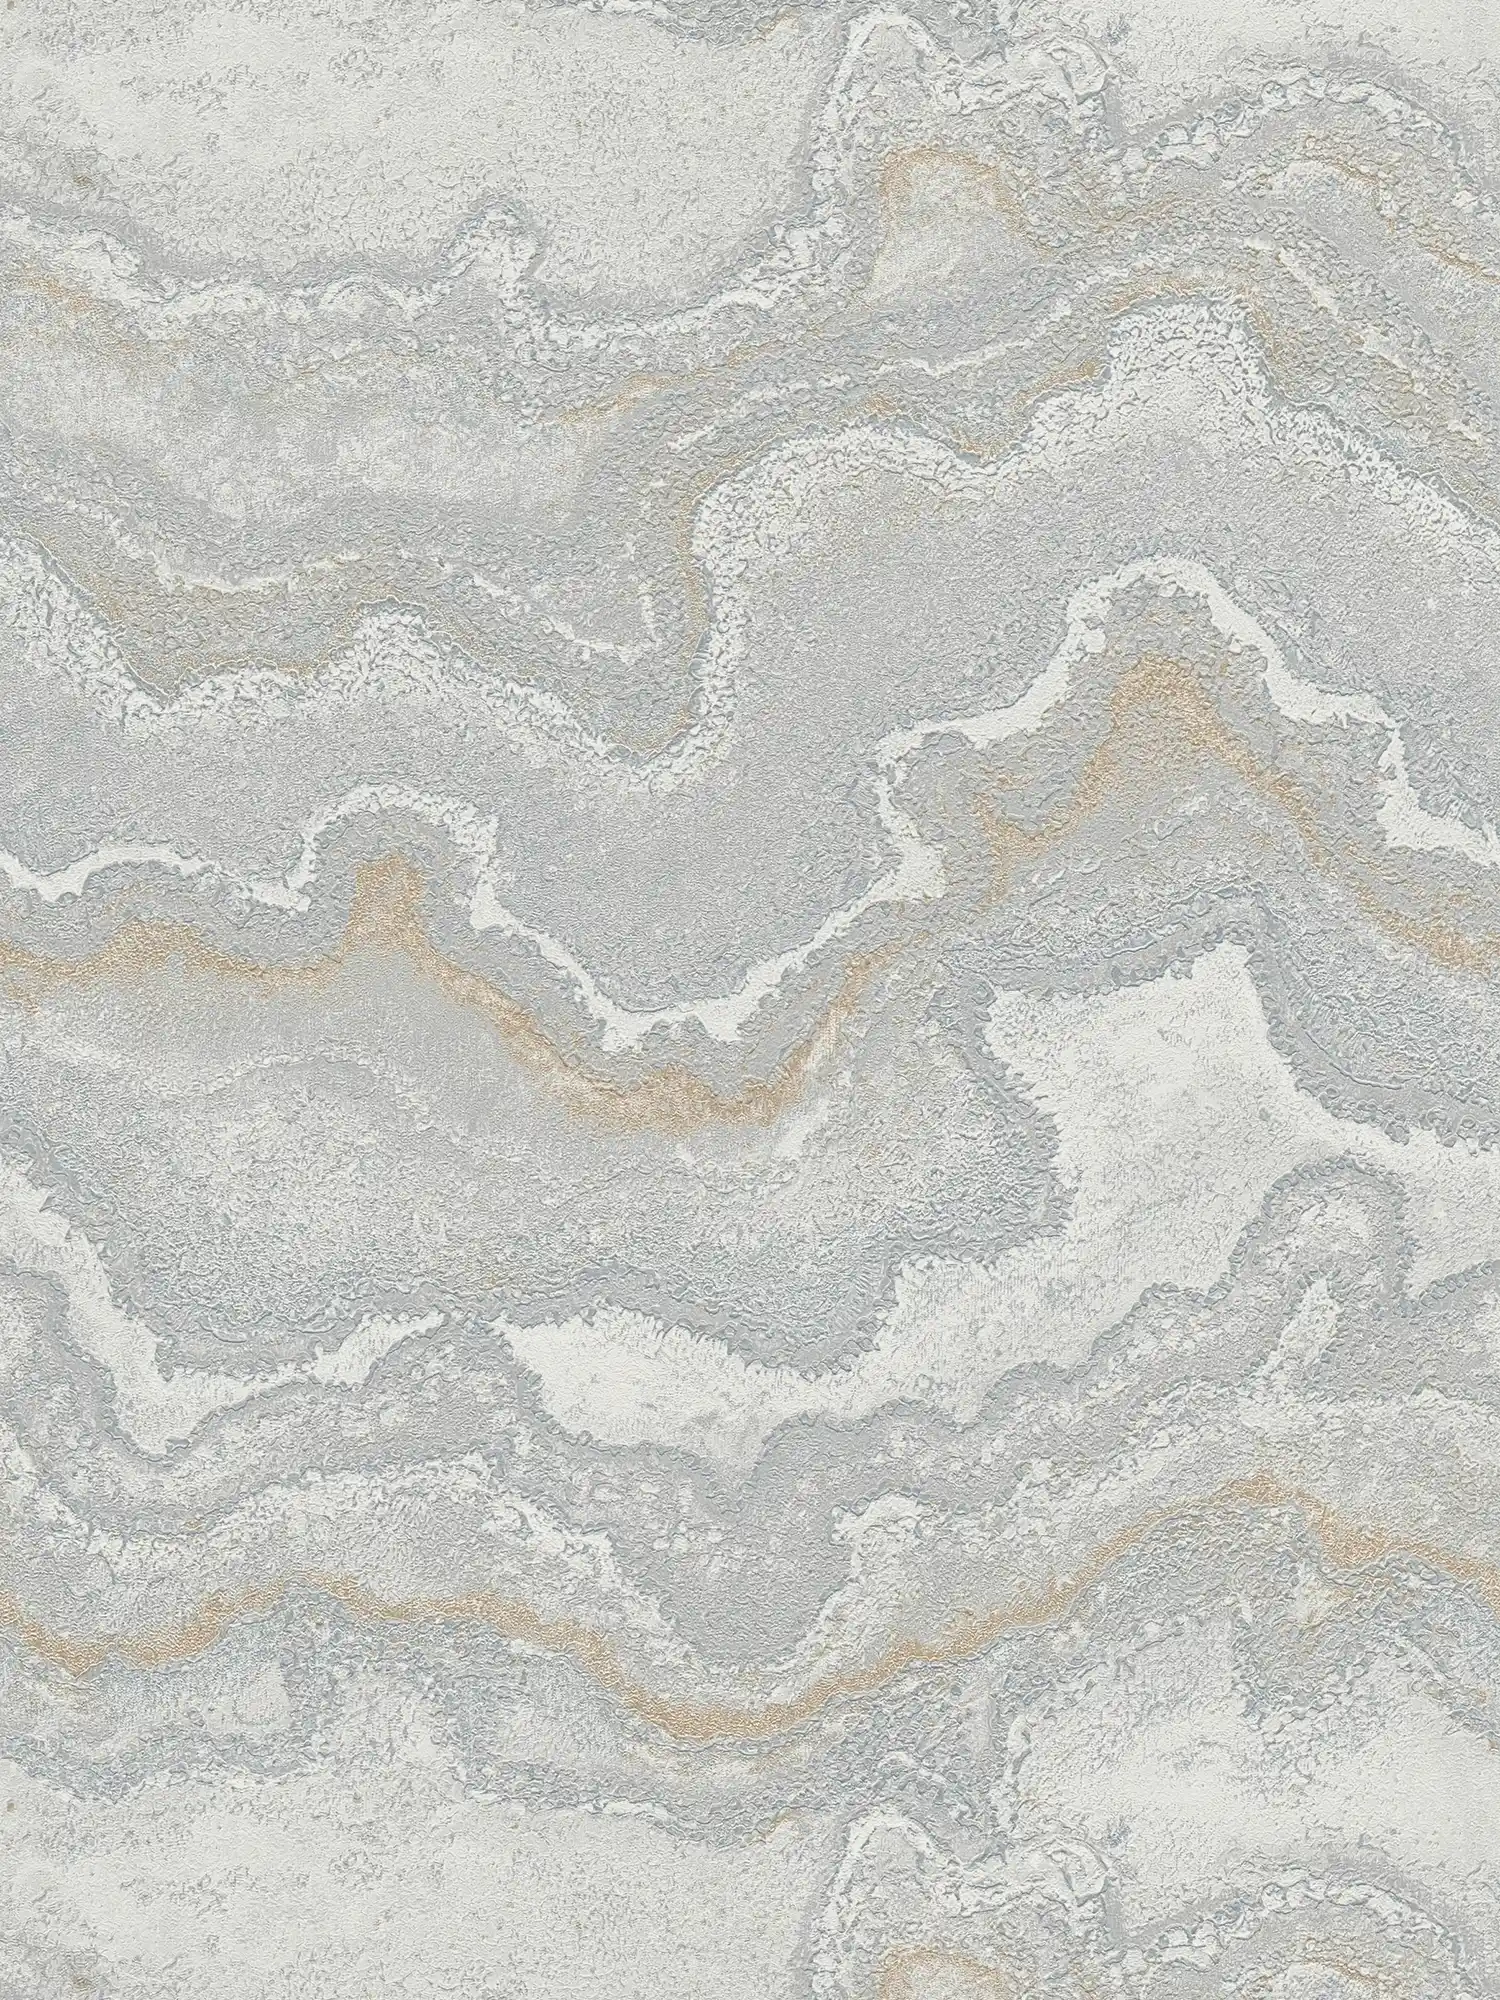         Vliestapete mit Marmor Bemusterung – Grau, Silber, Gold
    